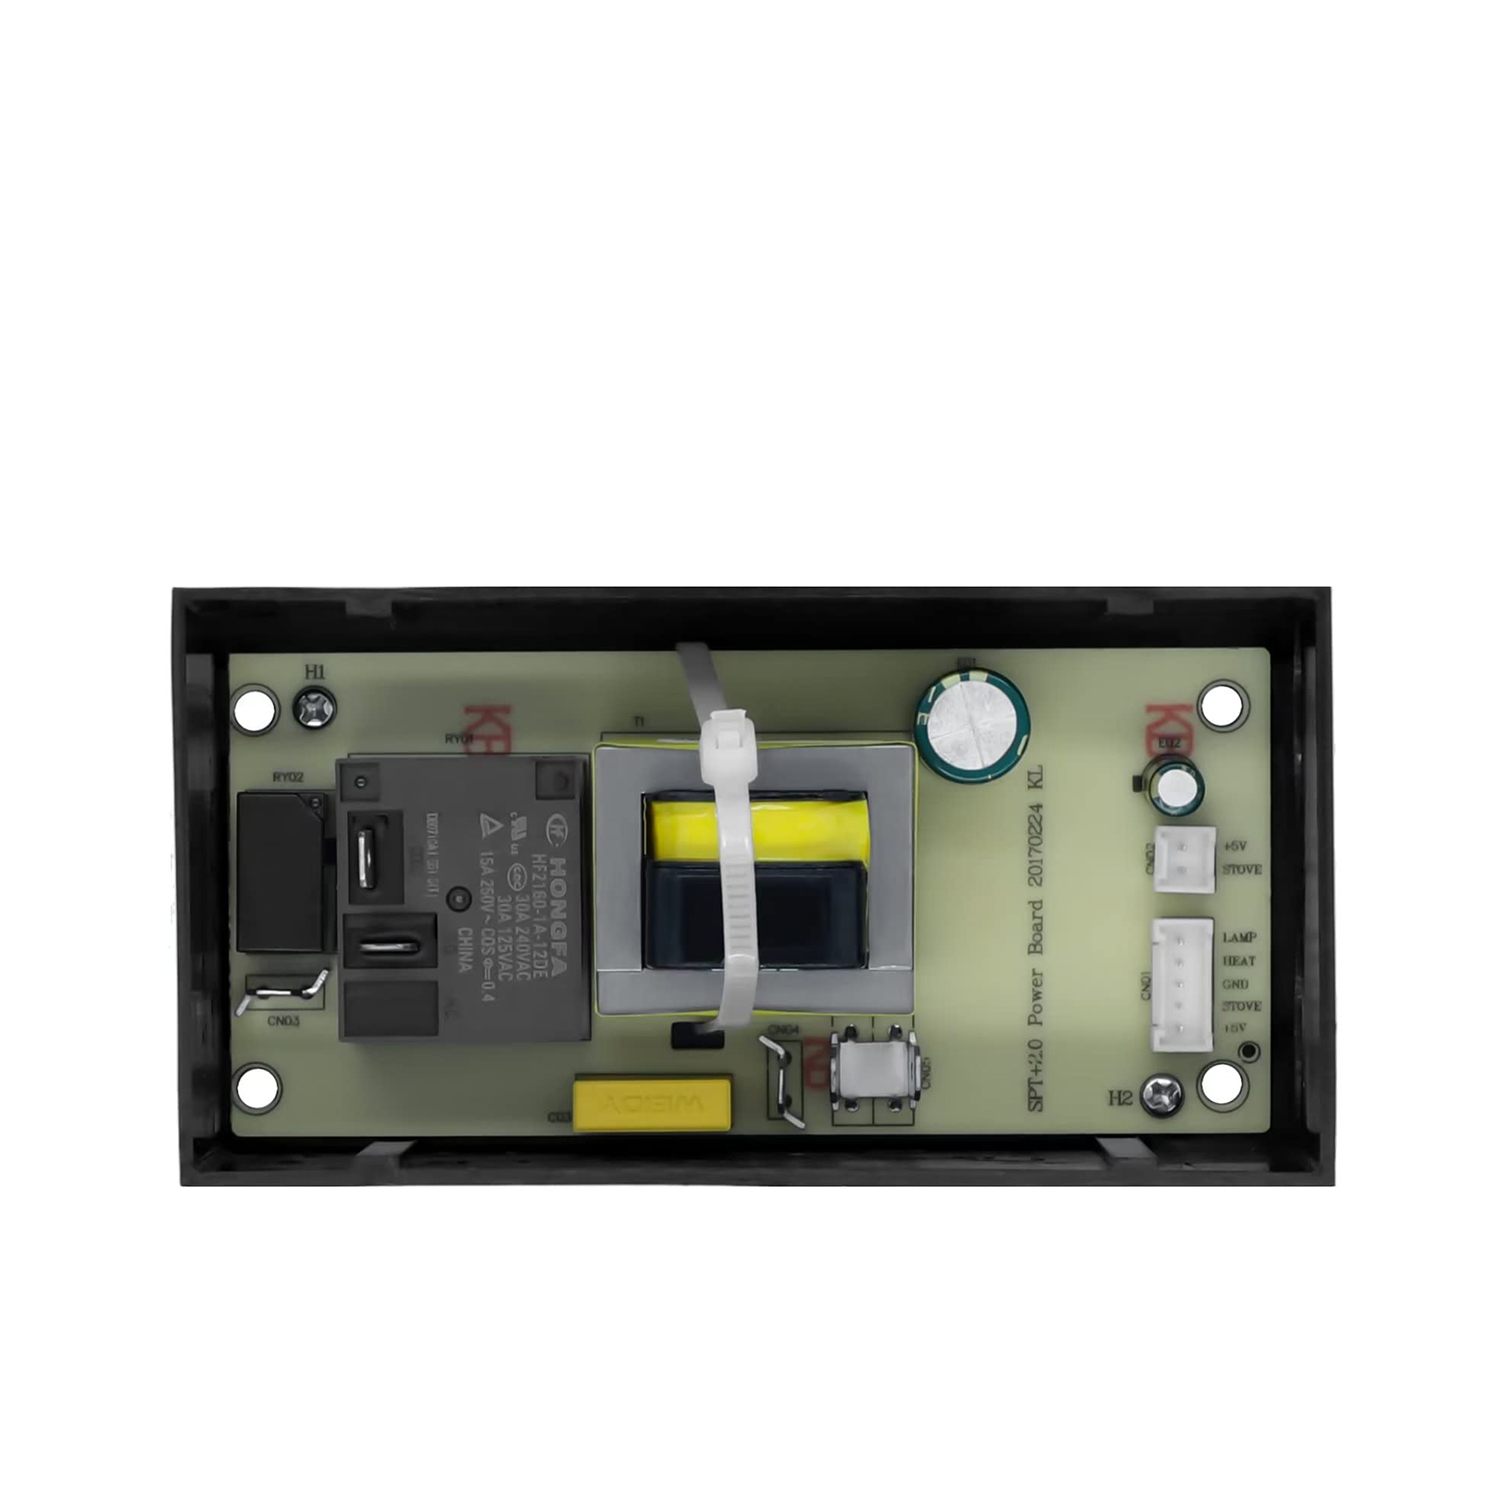 Part 9907170005, Power Circuit Board Kit for Masterbuilt Electric Smok